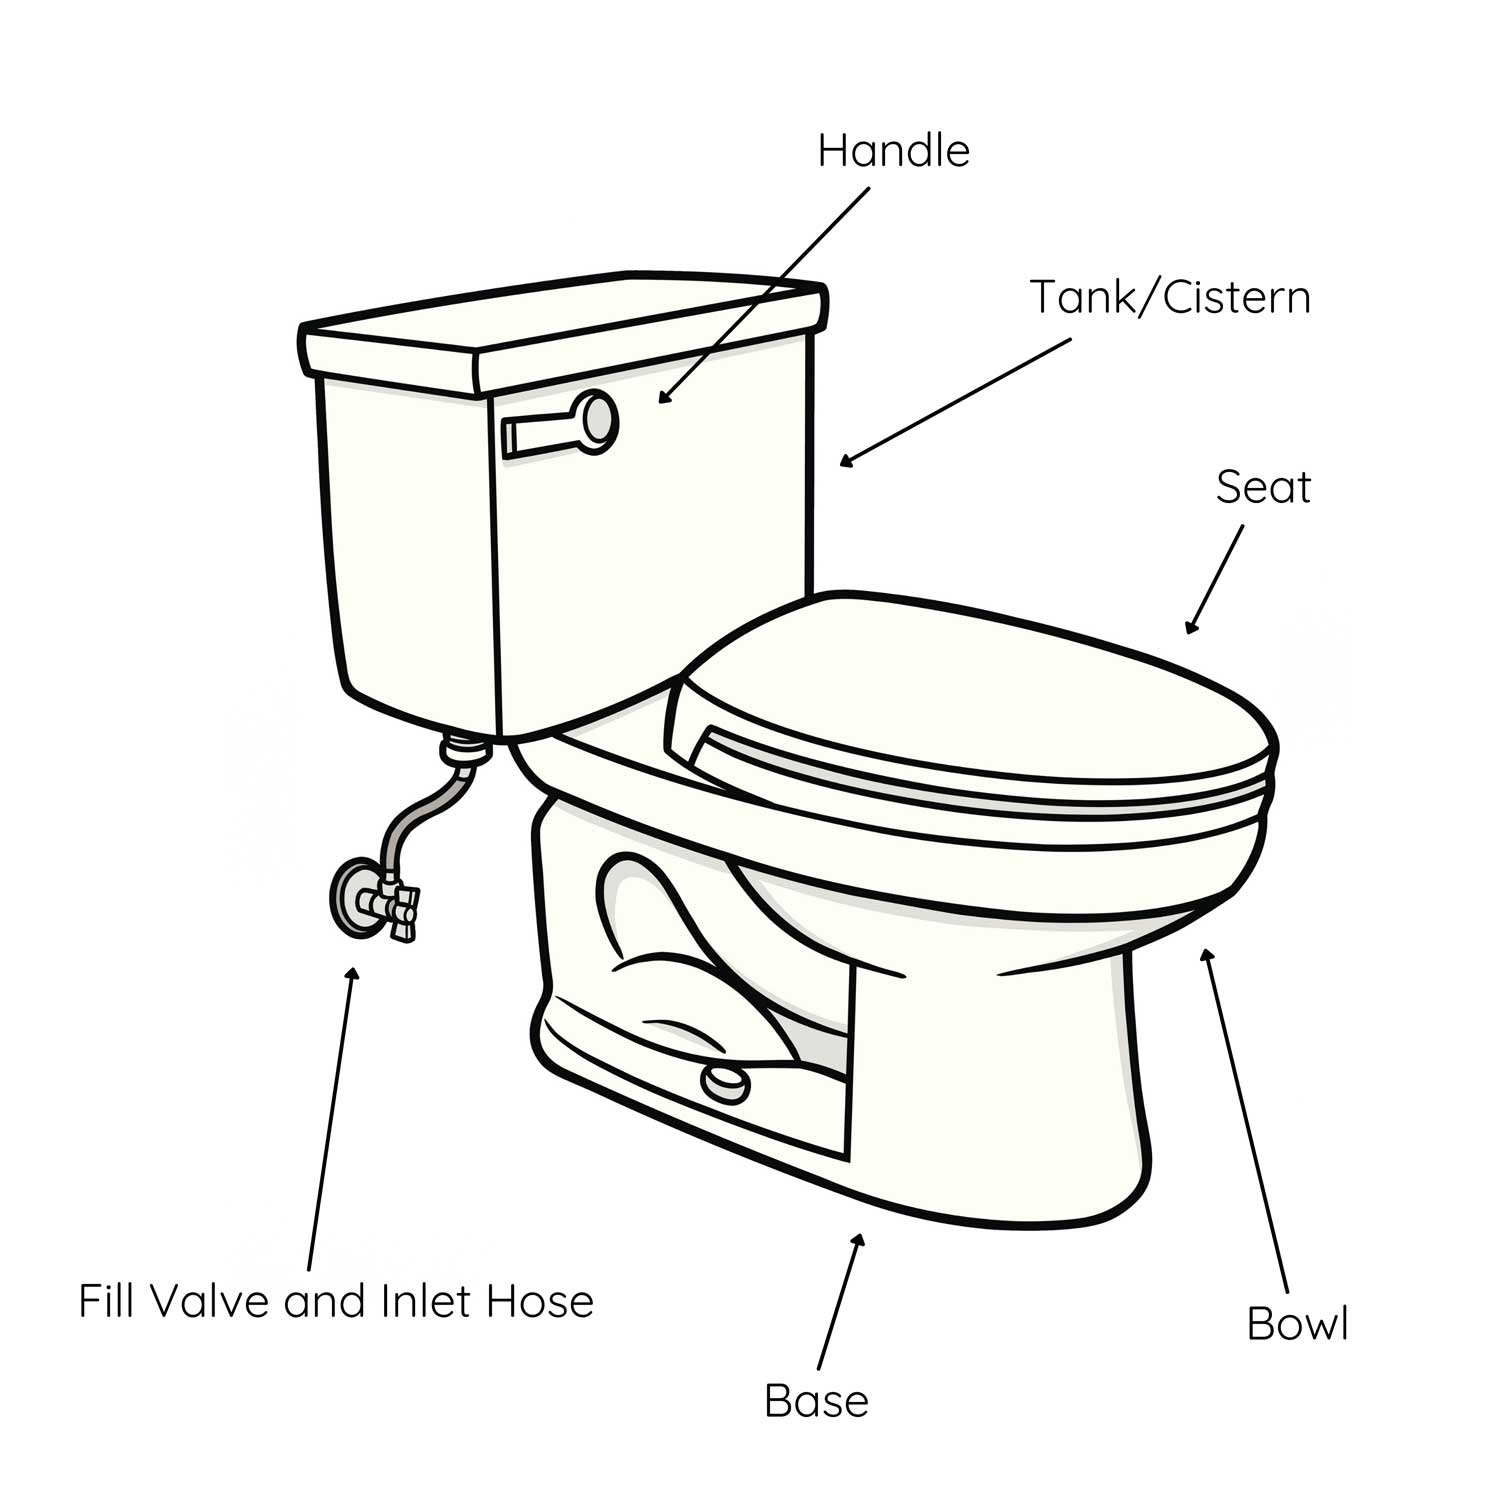 Parts of toilet seat illustration